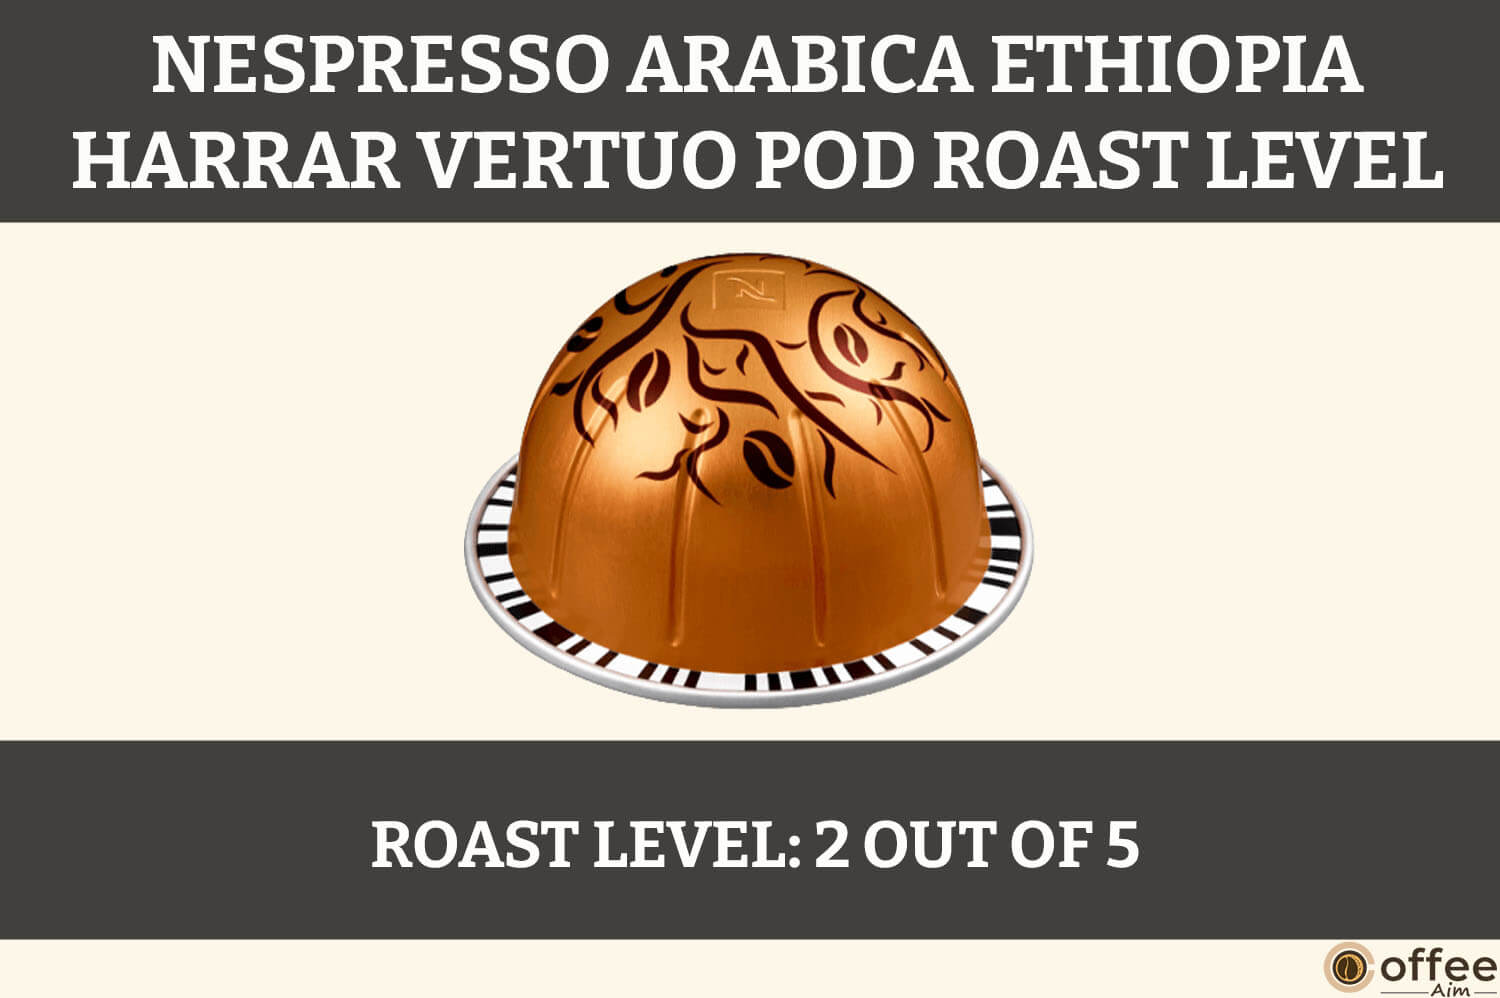 This image illustrates the roast level of the Nespresso Arabica Ethiopia Harrar Vertuo Pod, as featured in the article 'Nespresso Arabica Ethiopia Harrar Vertuo Pod Review.